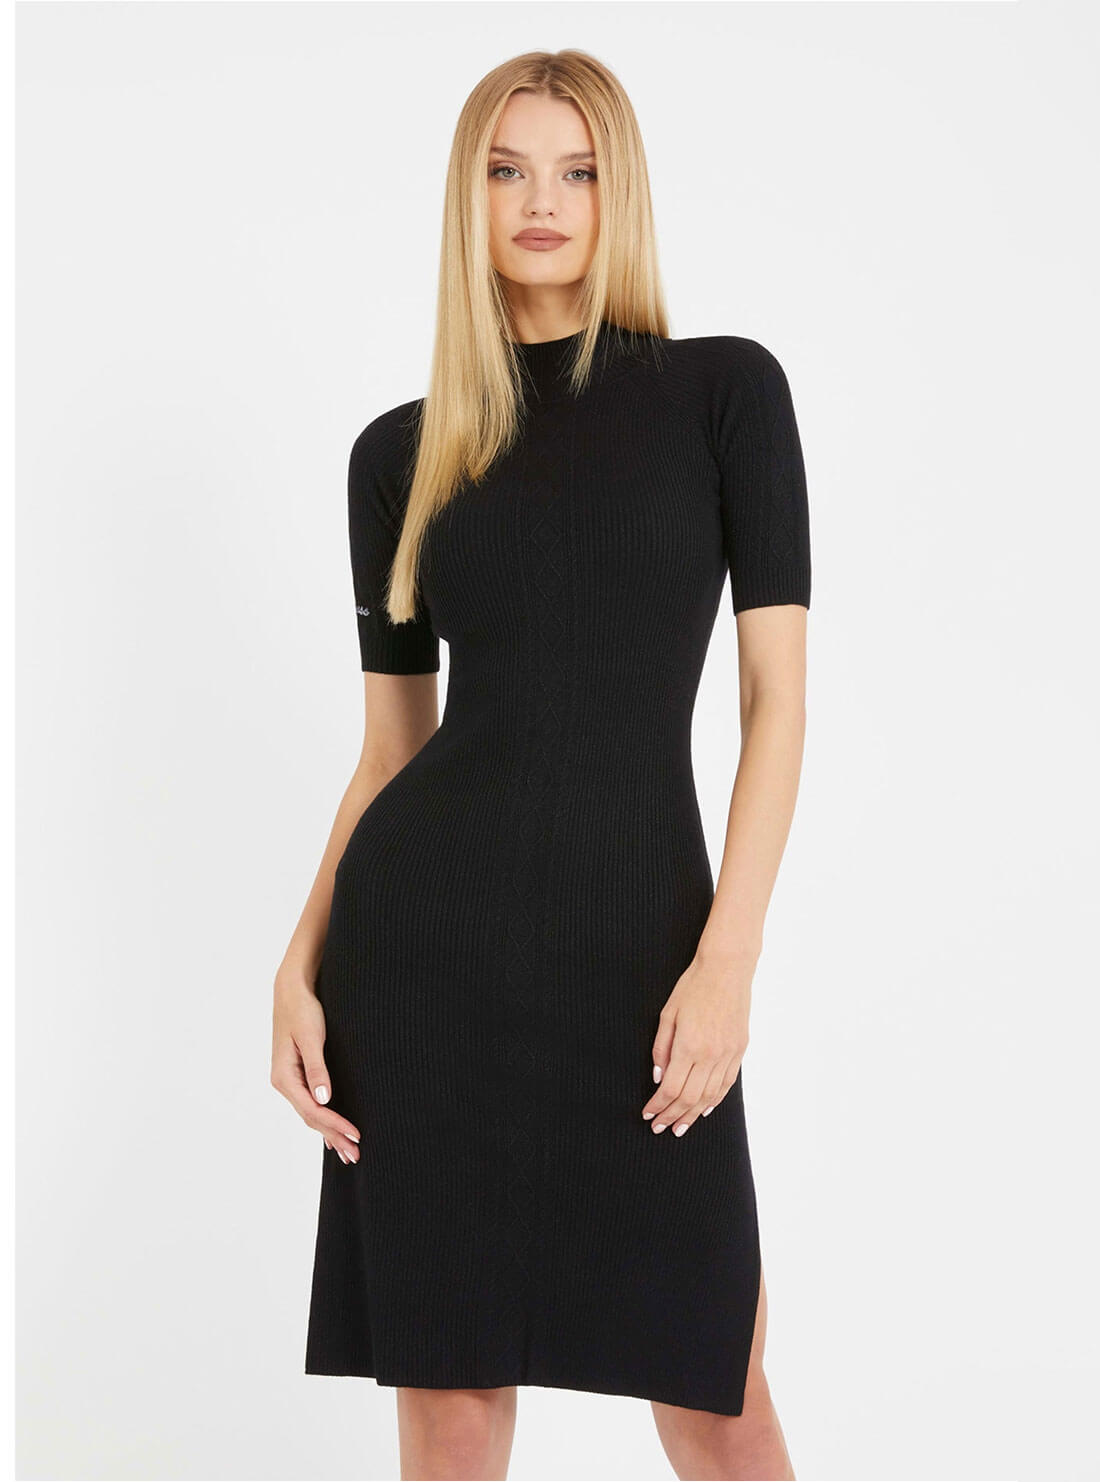 Black Arielle Knit Midi Dress | GUESS Women's Apparel | front view